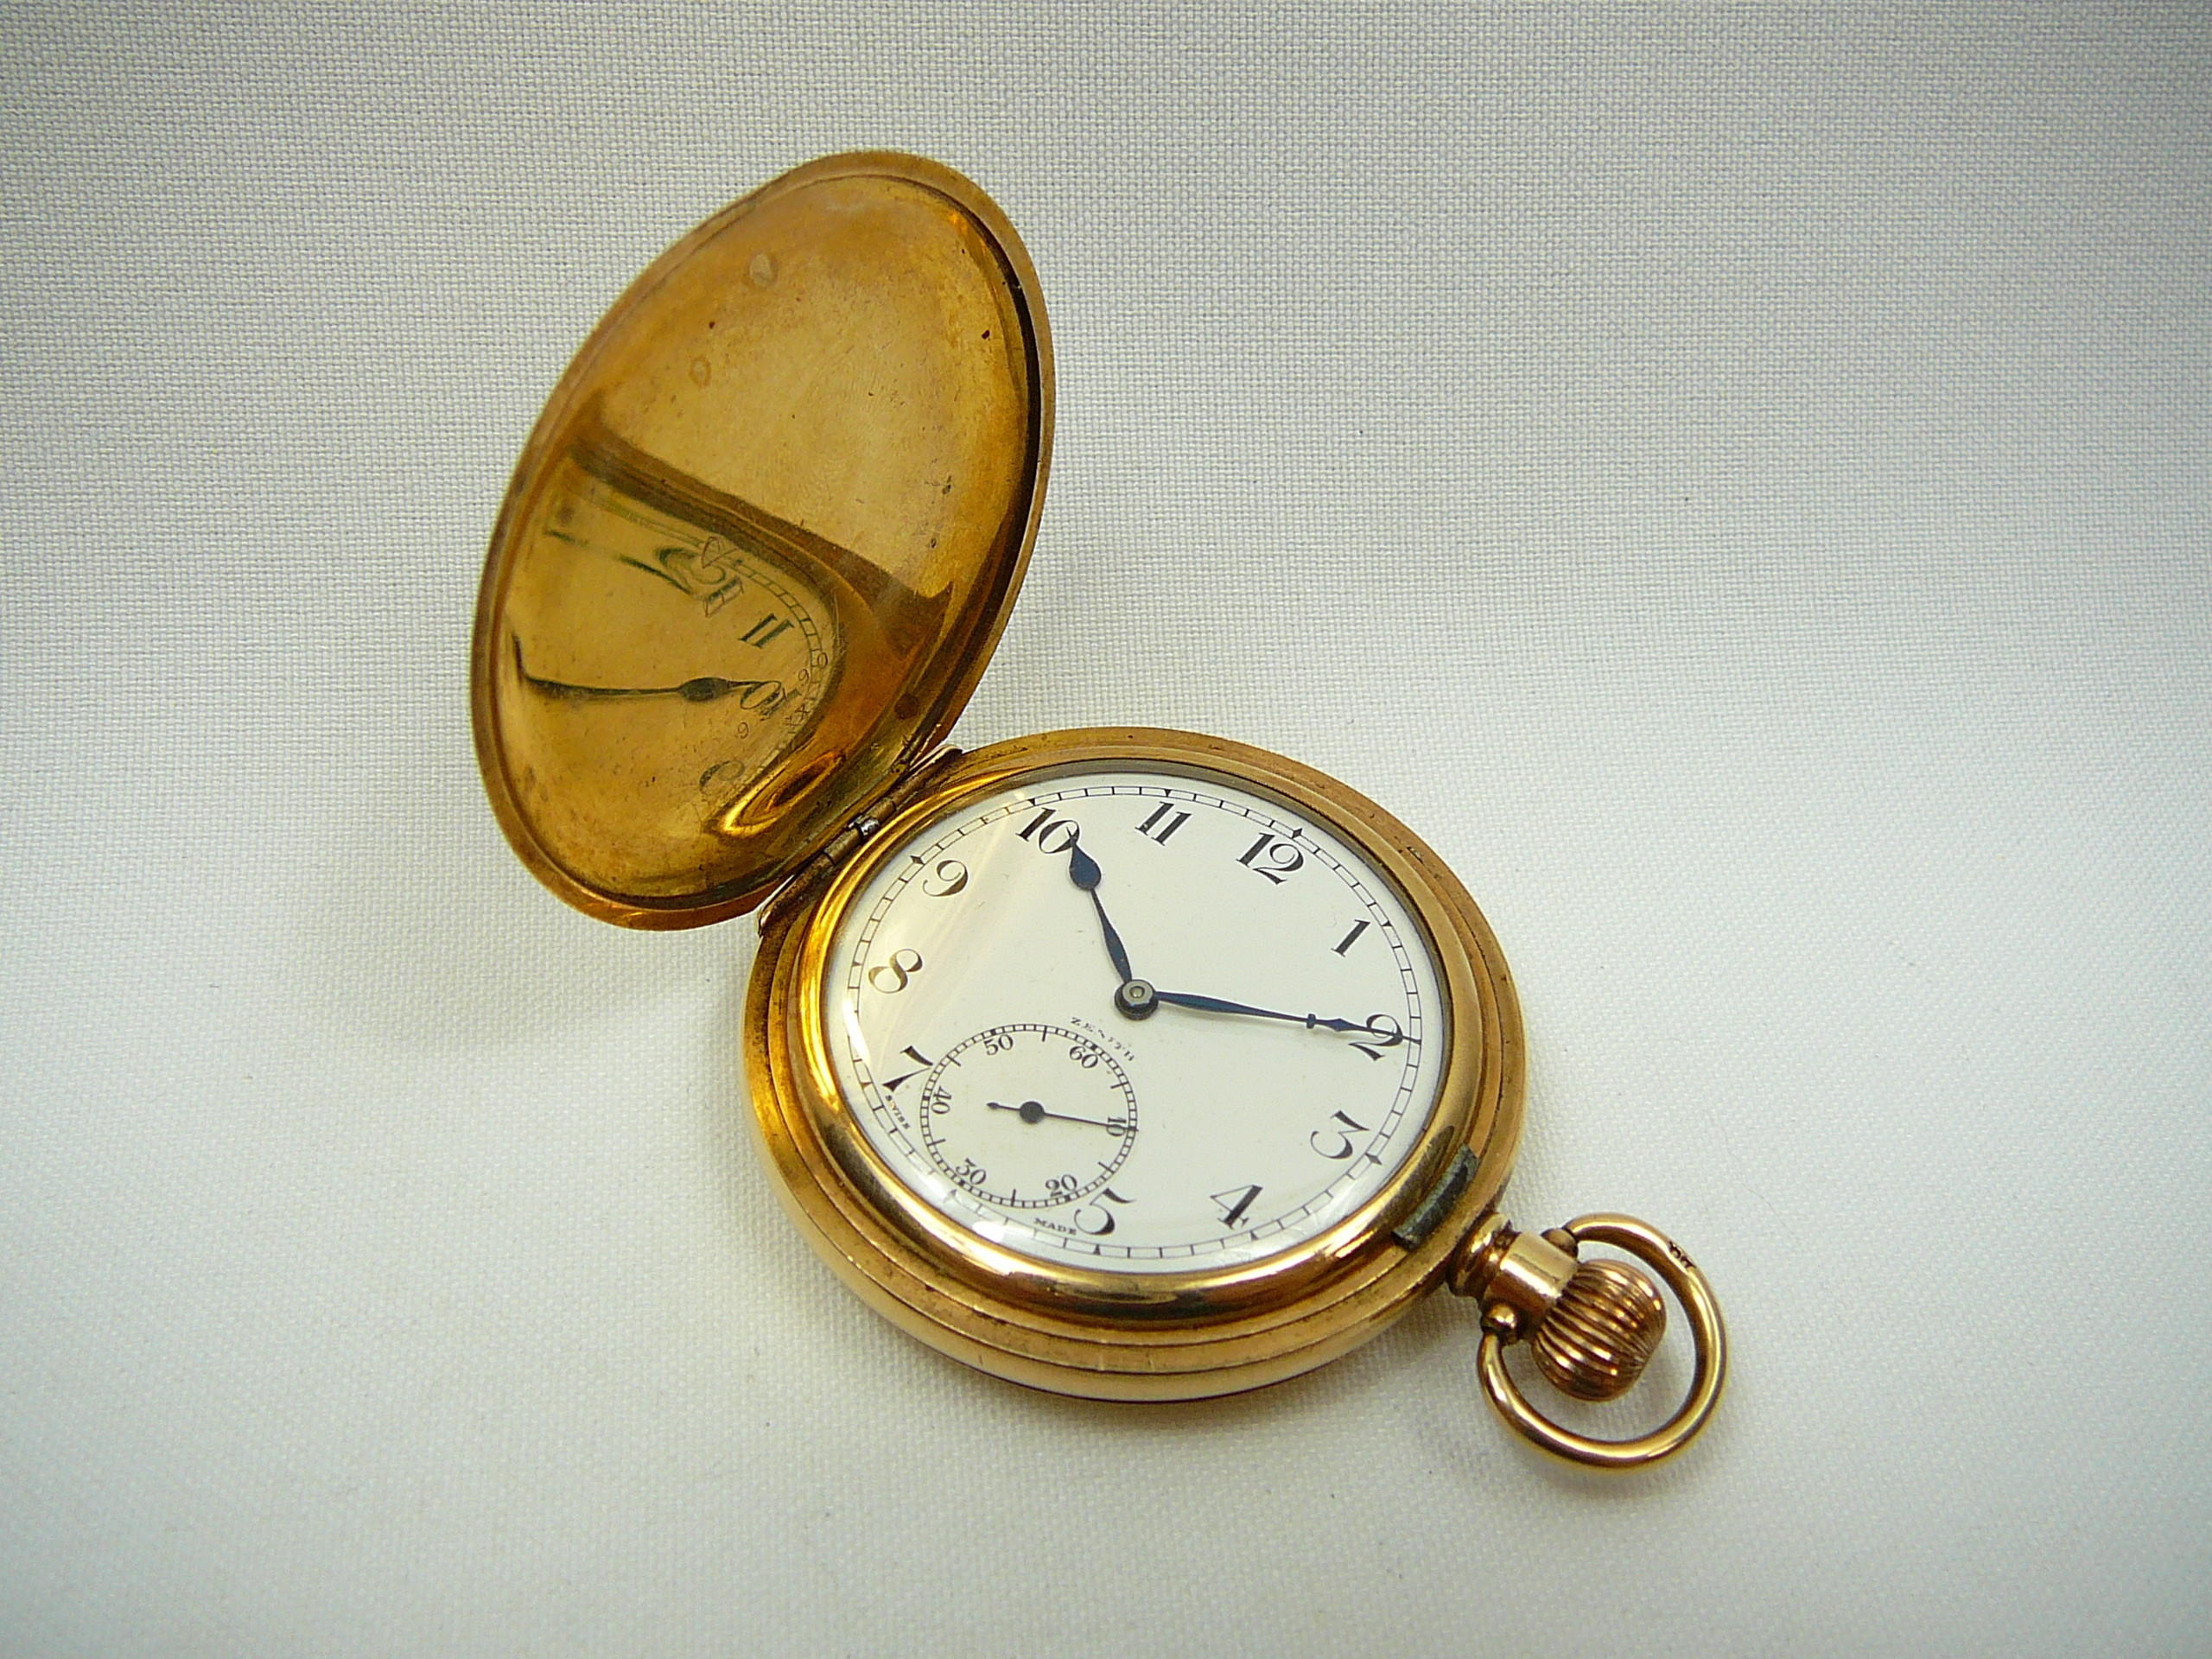 Gents Antique Pocket Watch by Zenith